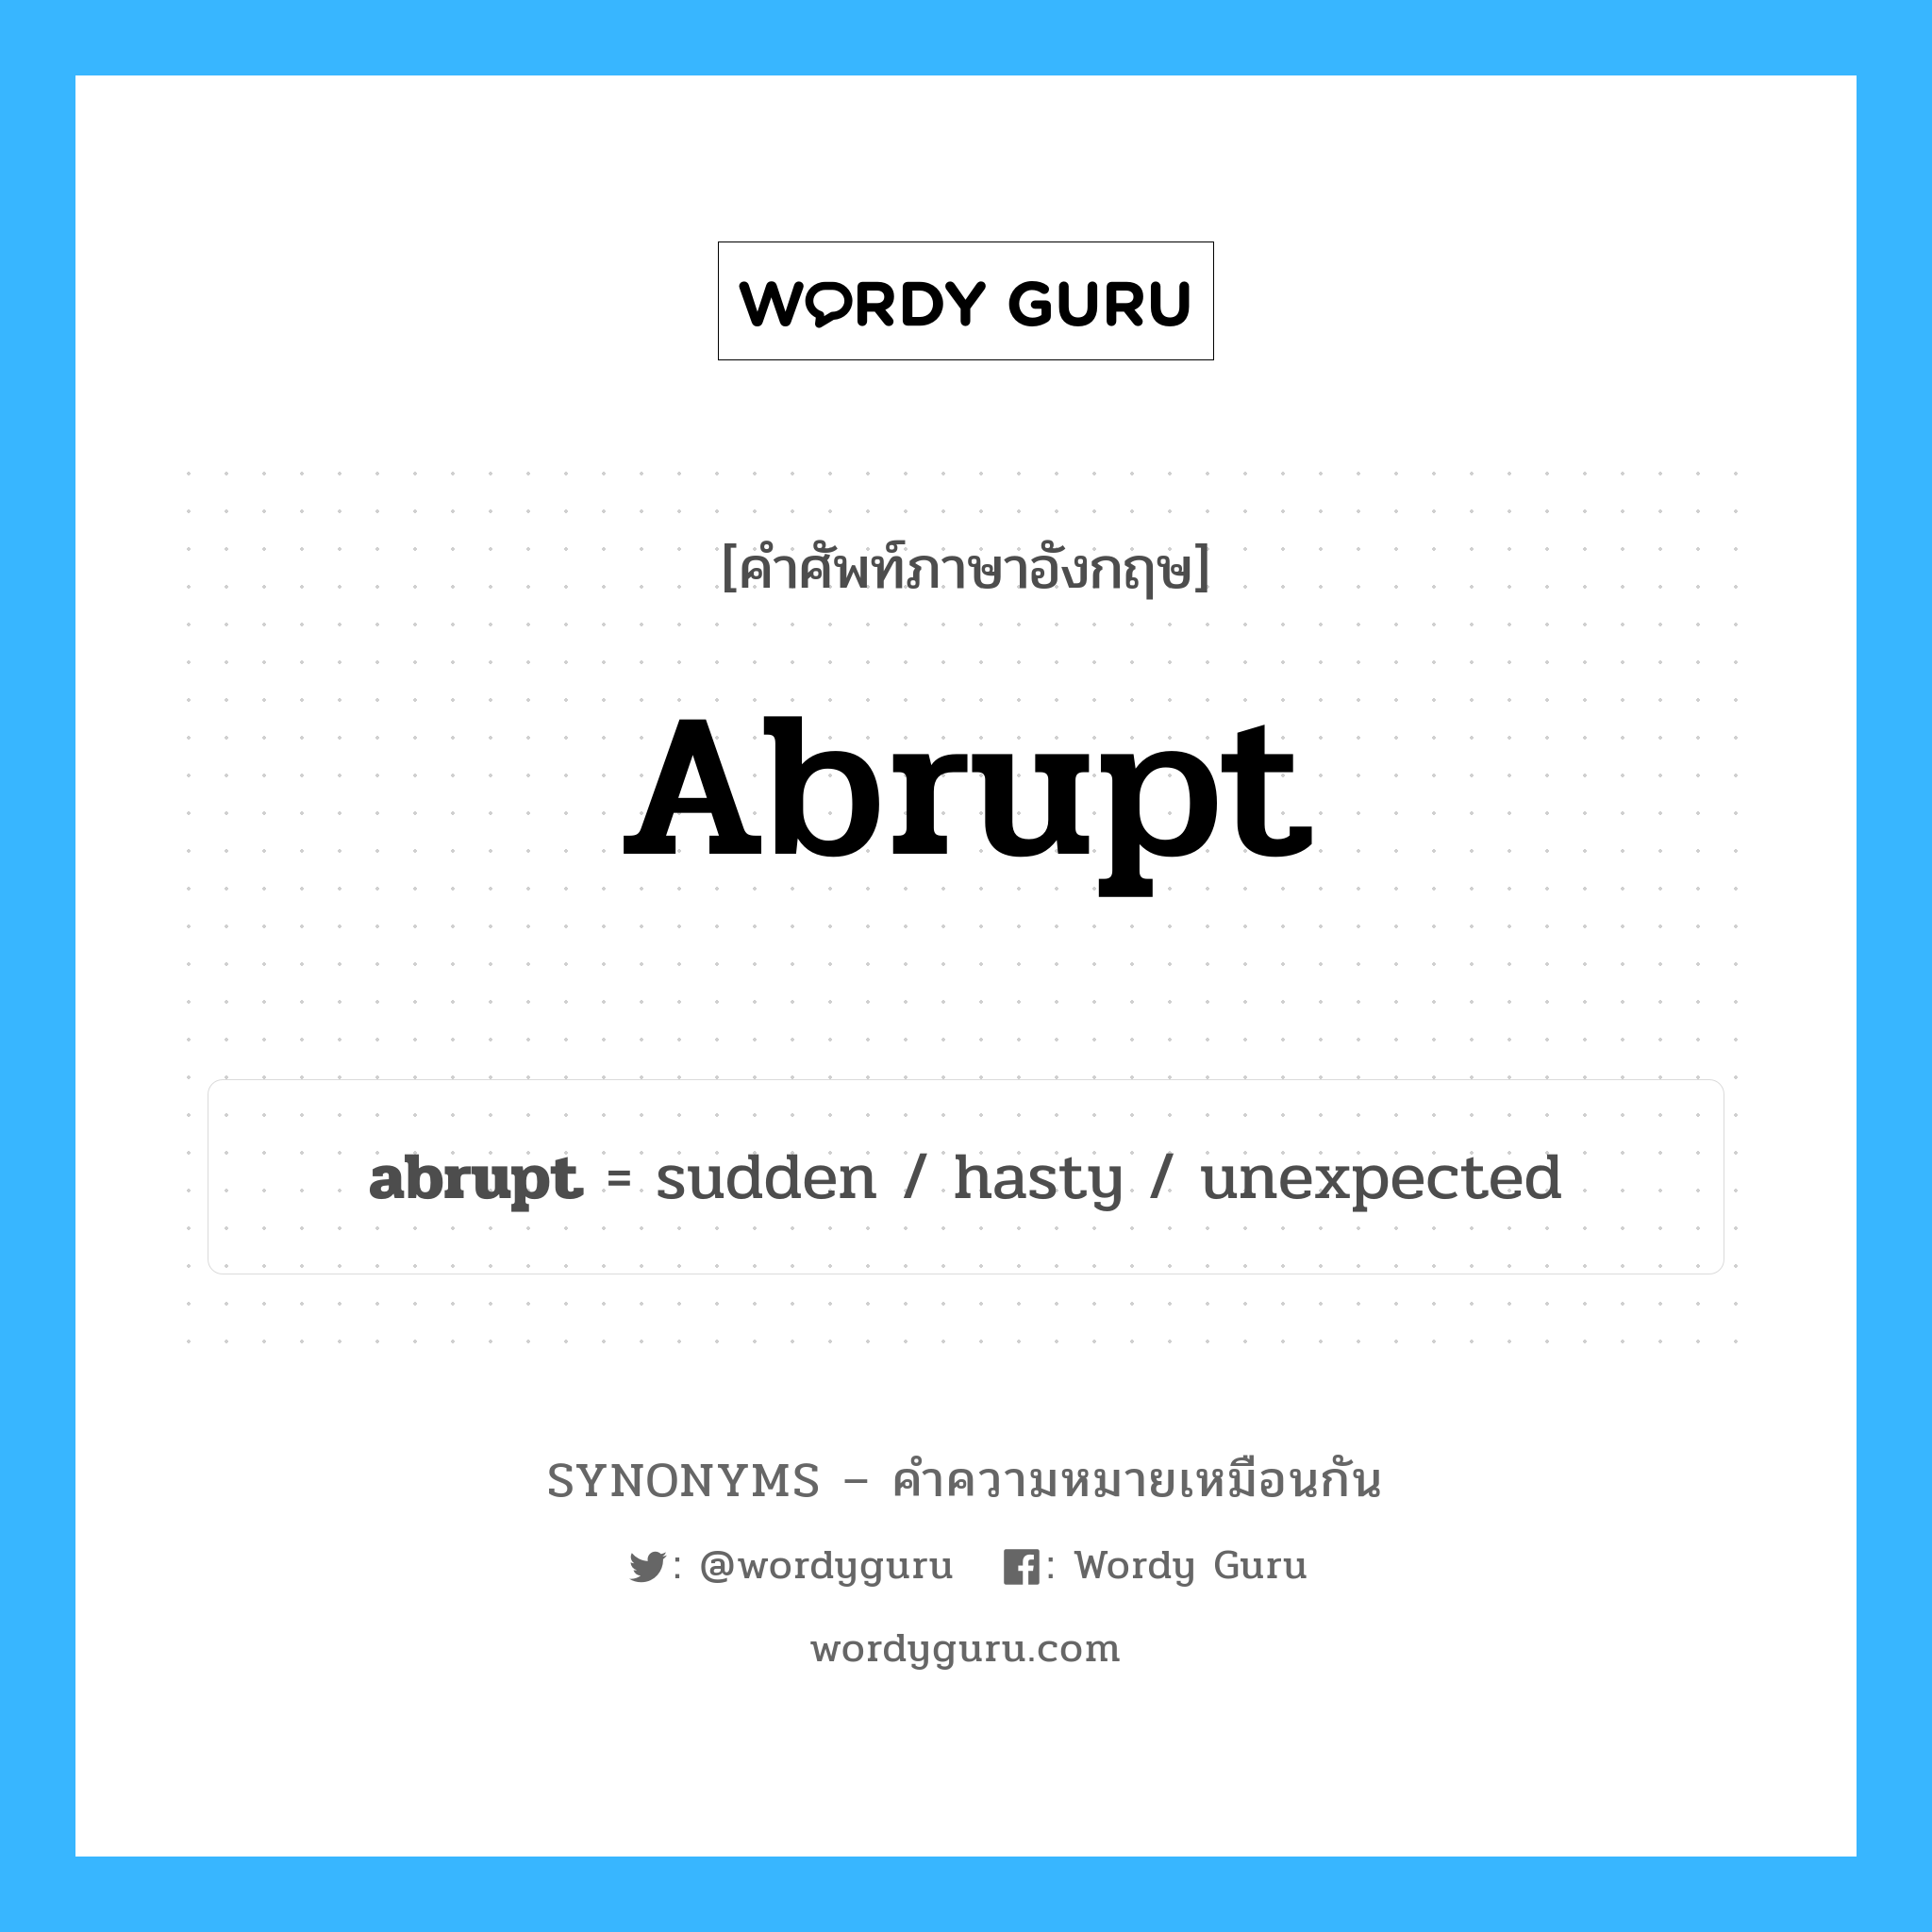 unexpected เป็นหนึ่งใน abrupt และมีคำอื่น ๆ อีกดังนี้, คำศัพท์ภาษาอังกฤษ unexpected ความหมายคล้ายกันกับ abrupt แปลว่า ไม่คาดคิด หมวด abrupt